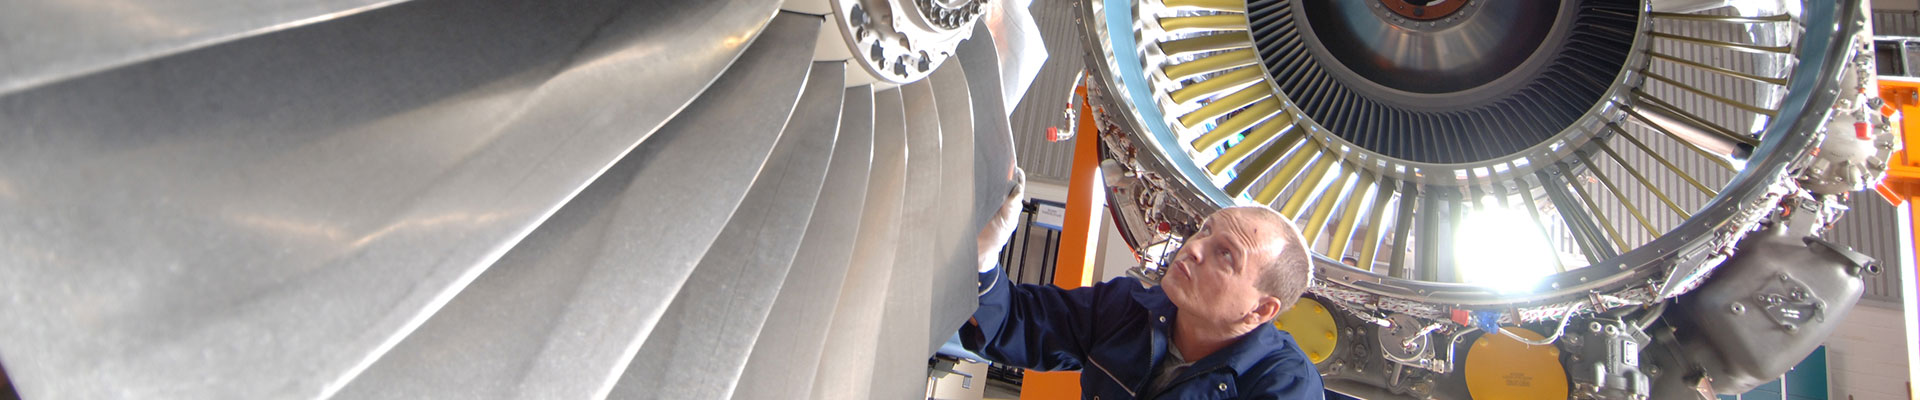 Pratt & Whitney delivers over 400 PT6 E-Series engines